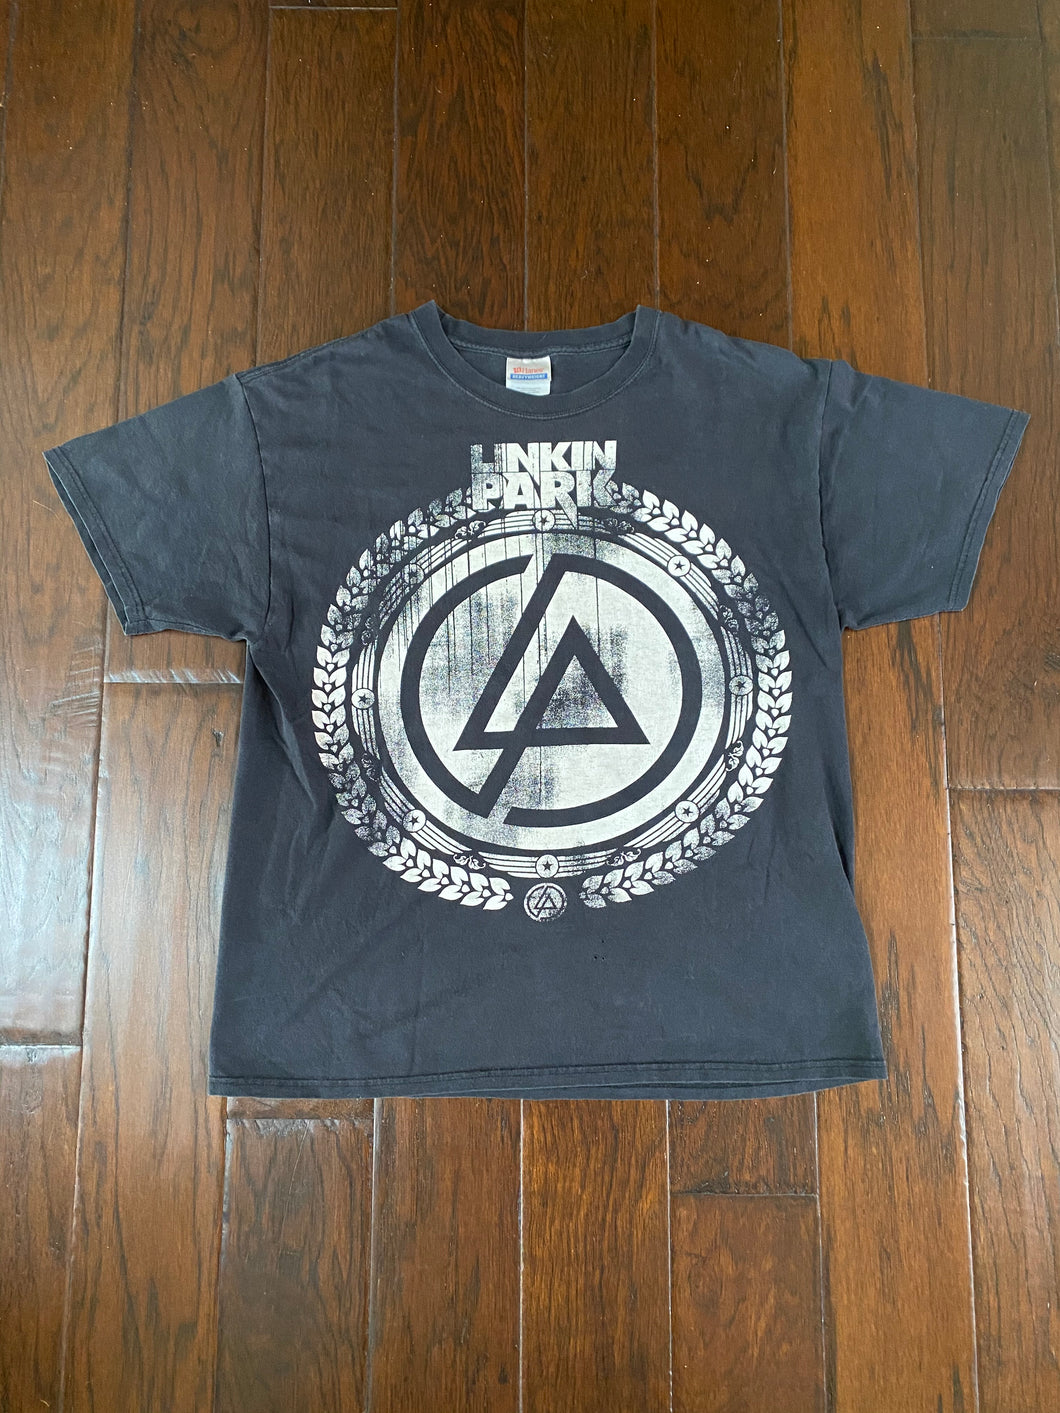 Linkin Park 2008 Vintage Distressed World Tour T-shirt